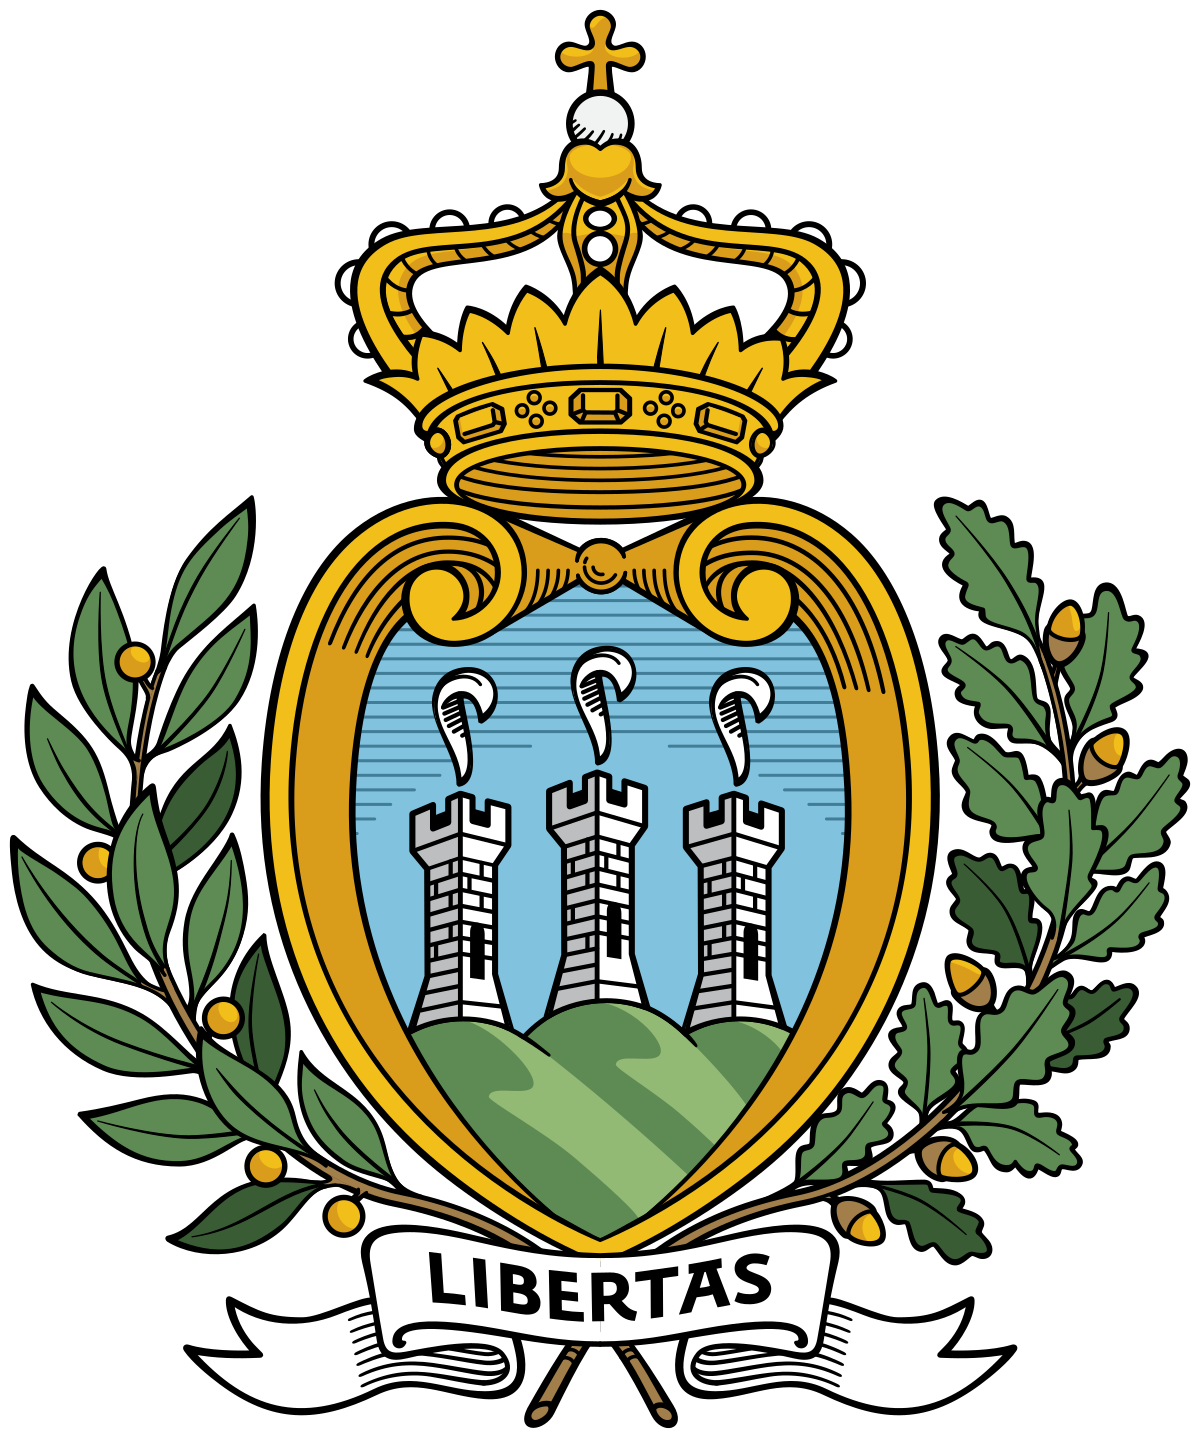 File:Targa prova San Marino su una linea.jpg - Wikimedia Commons